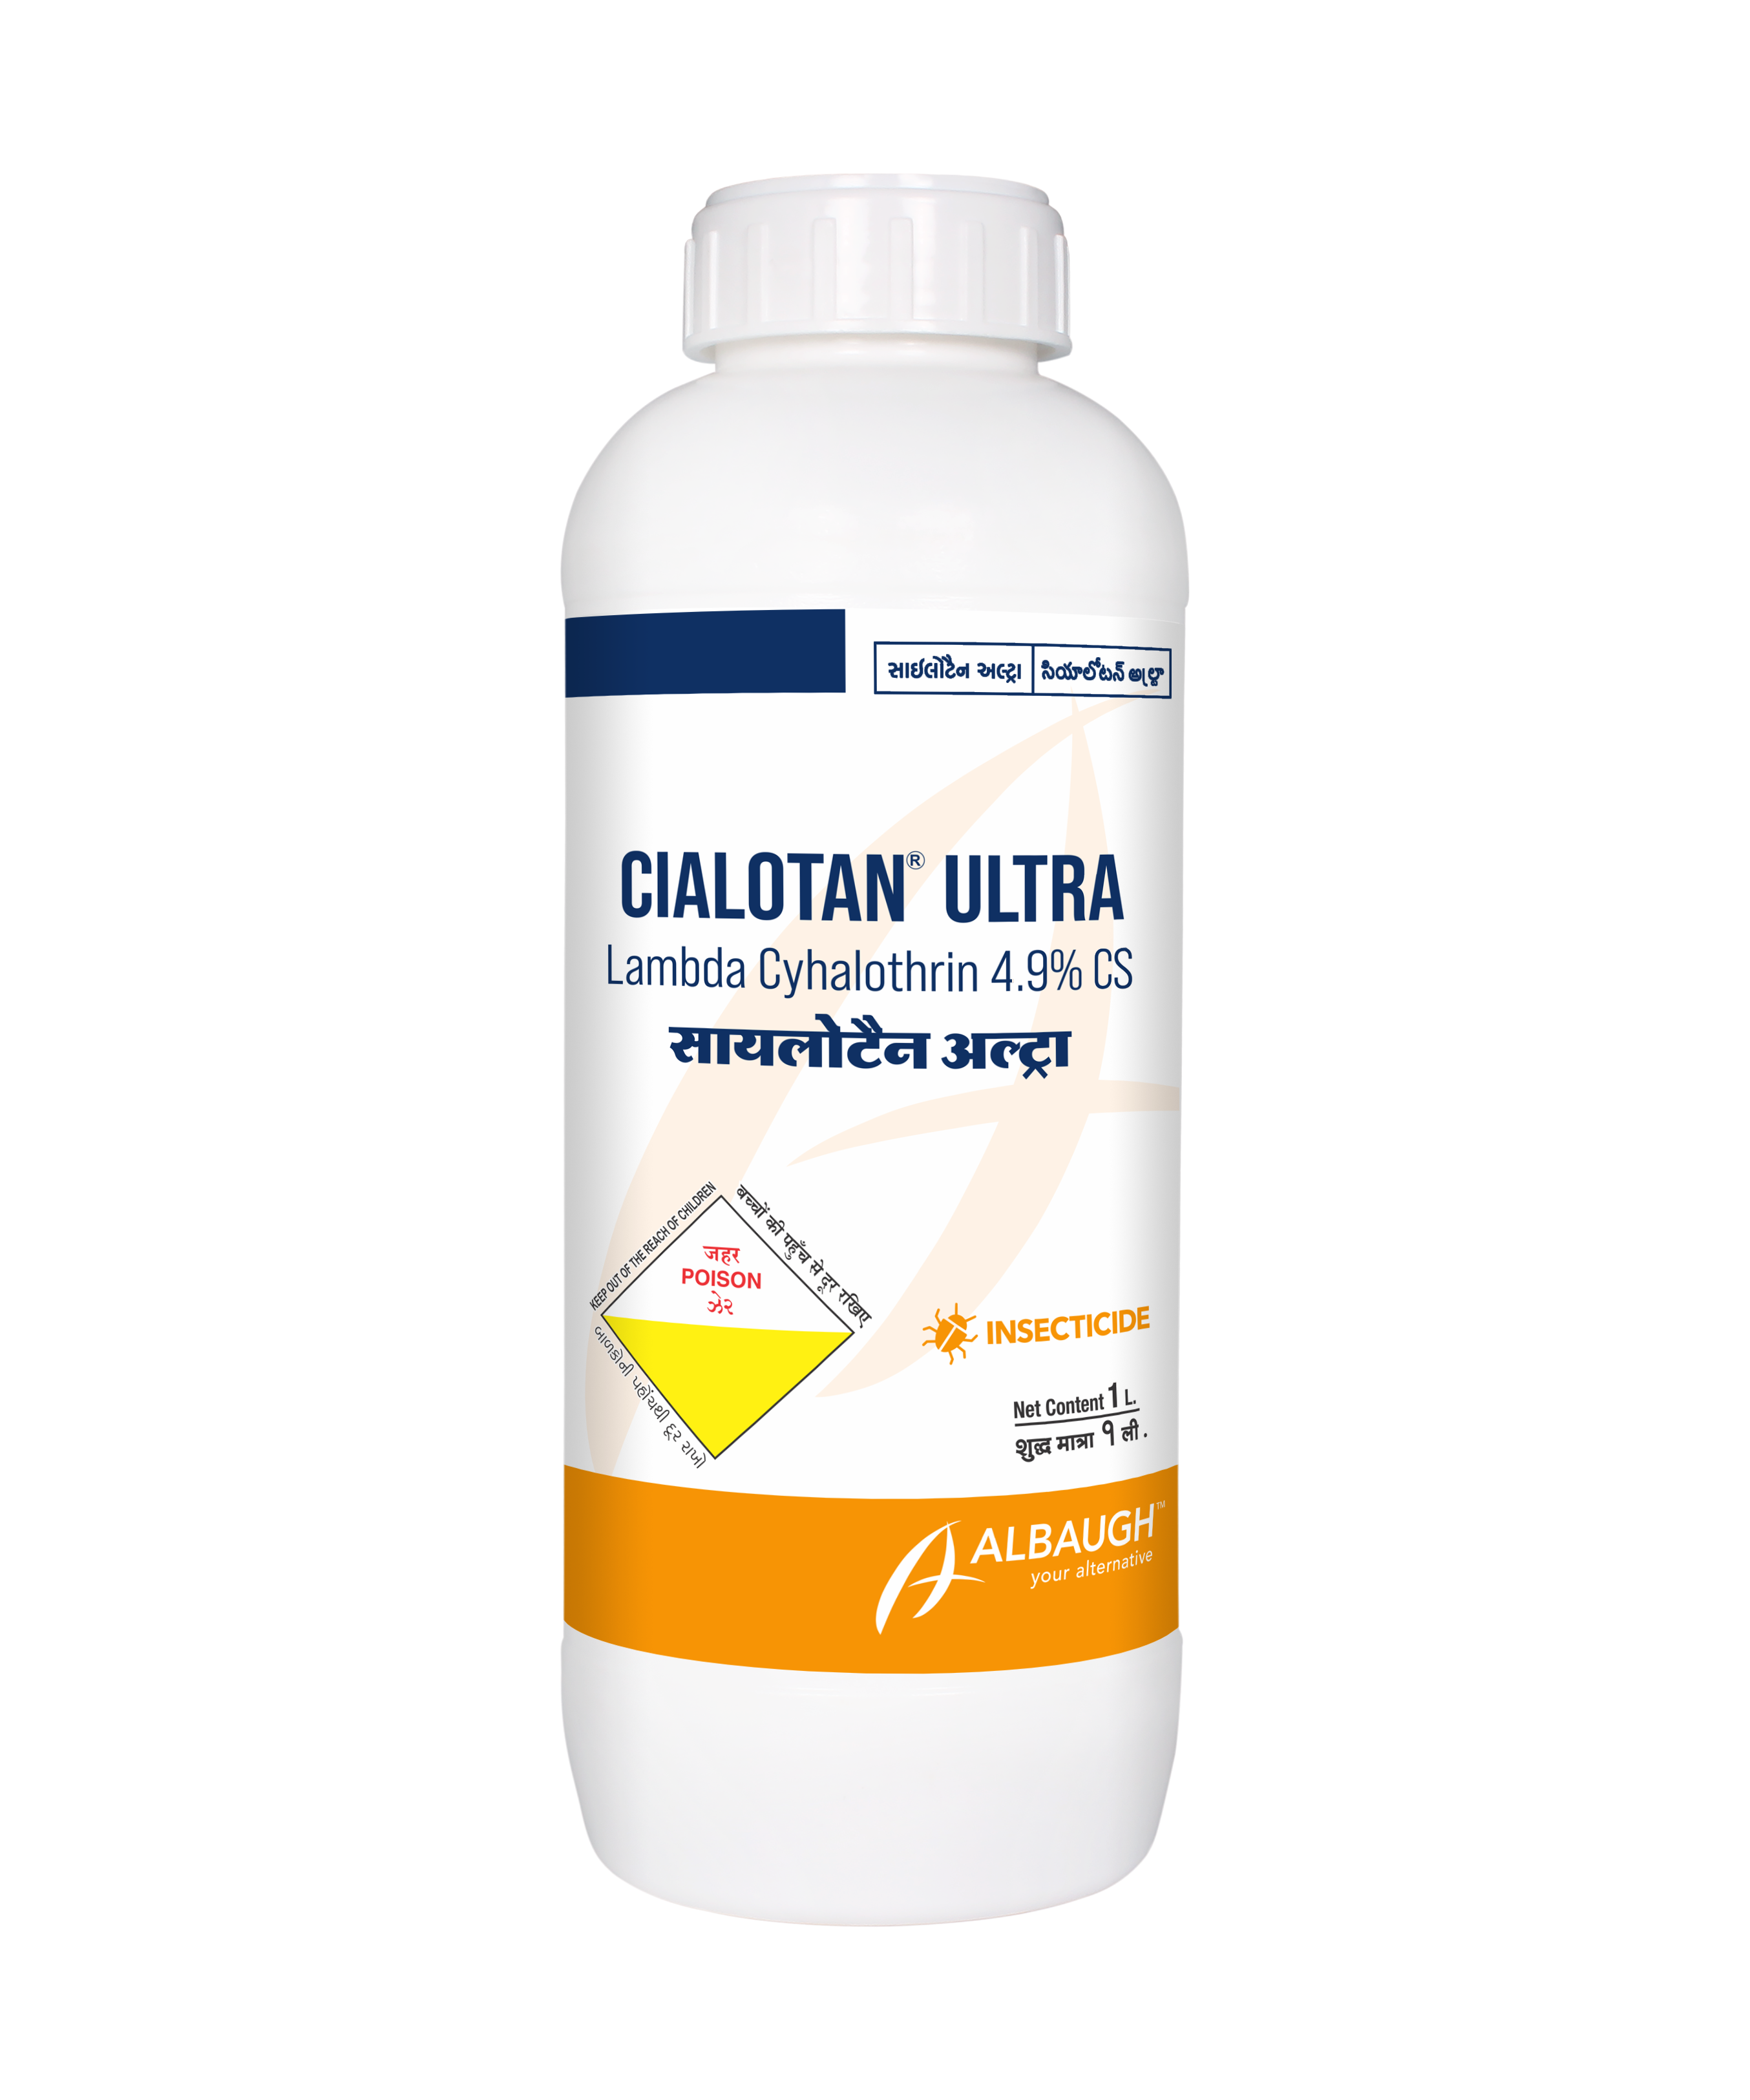 Cialotan Ultra: Lambda Cyhalothrin 4.9% CS